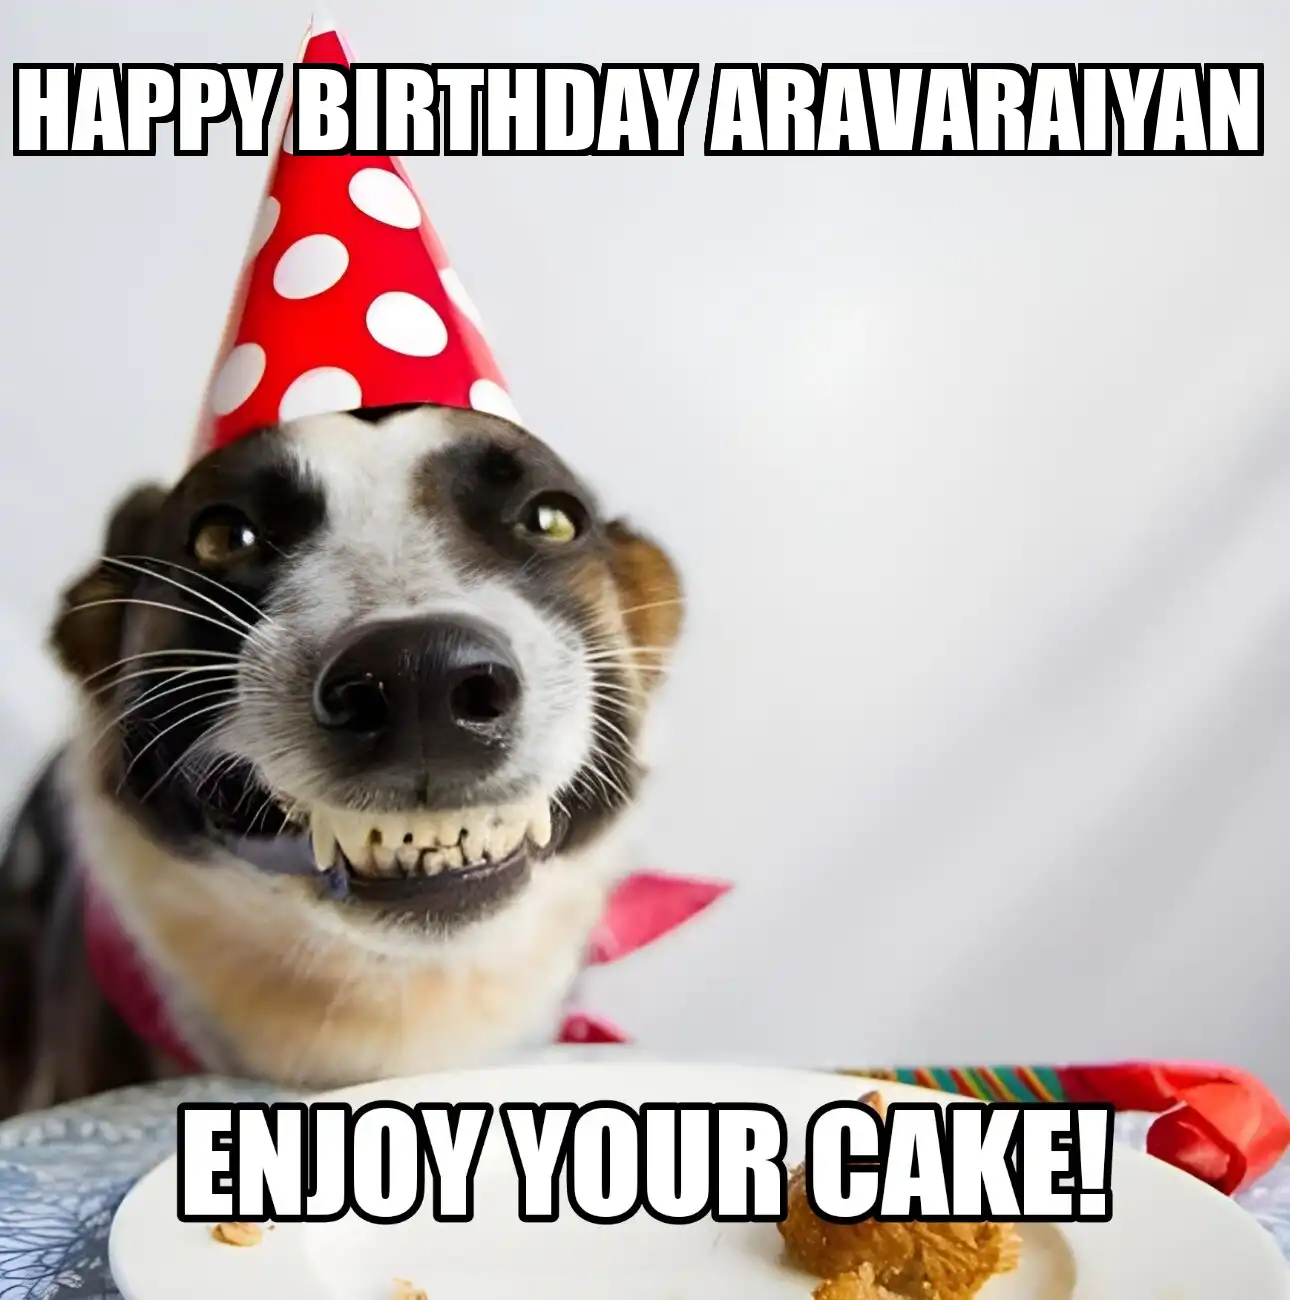 Happy Birthday Aravaraiyan Enjoy Your Cake Dog Meme